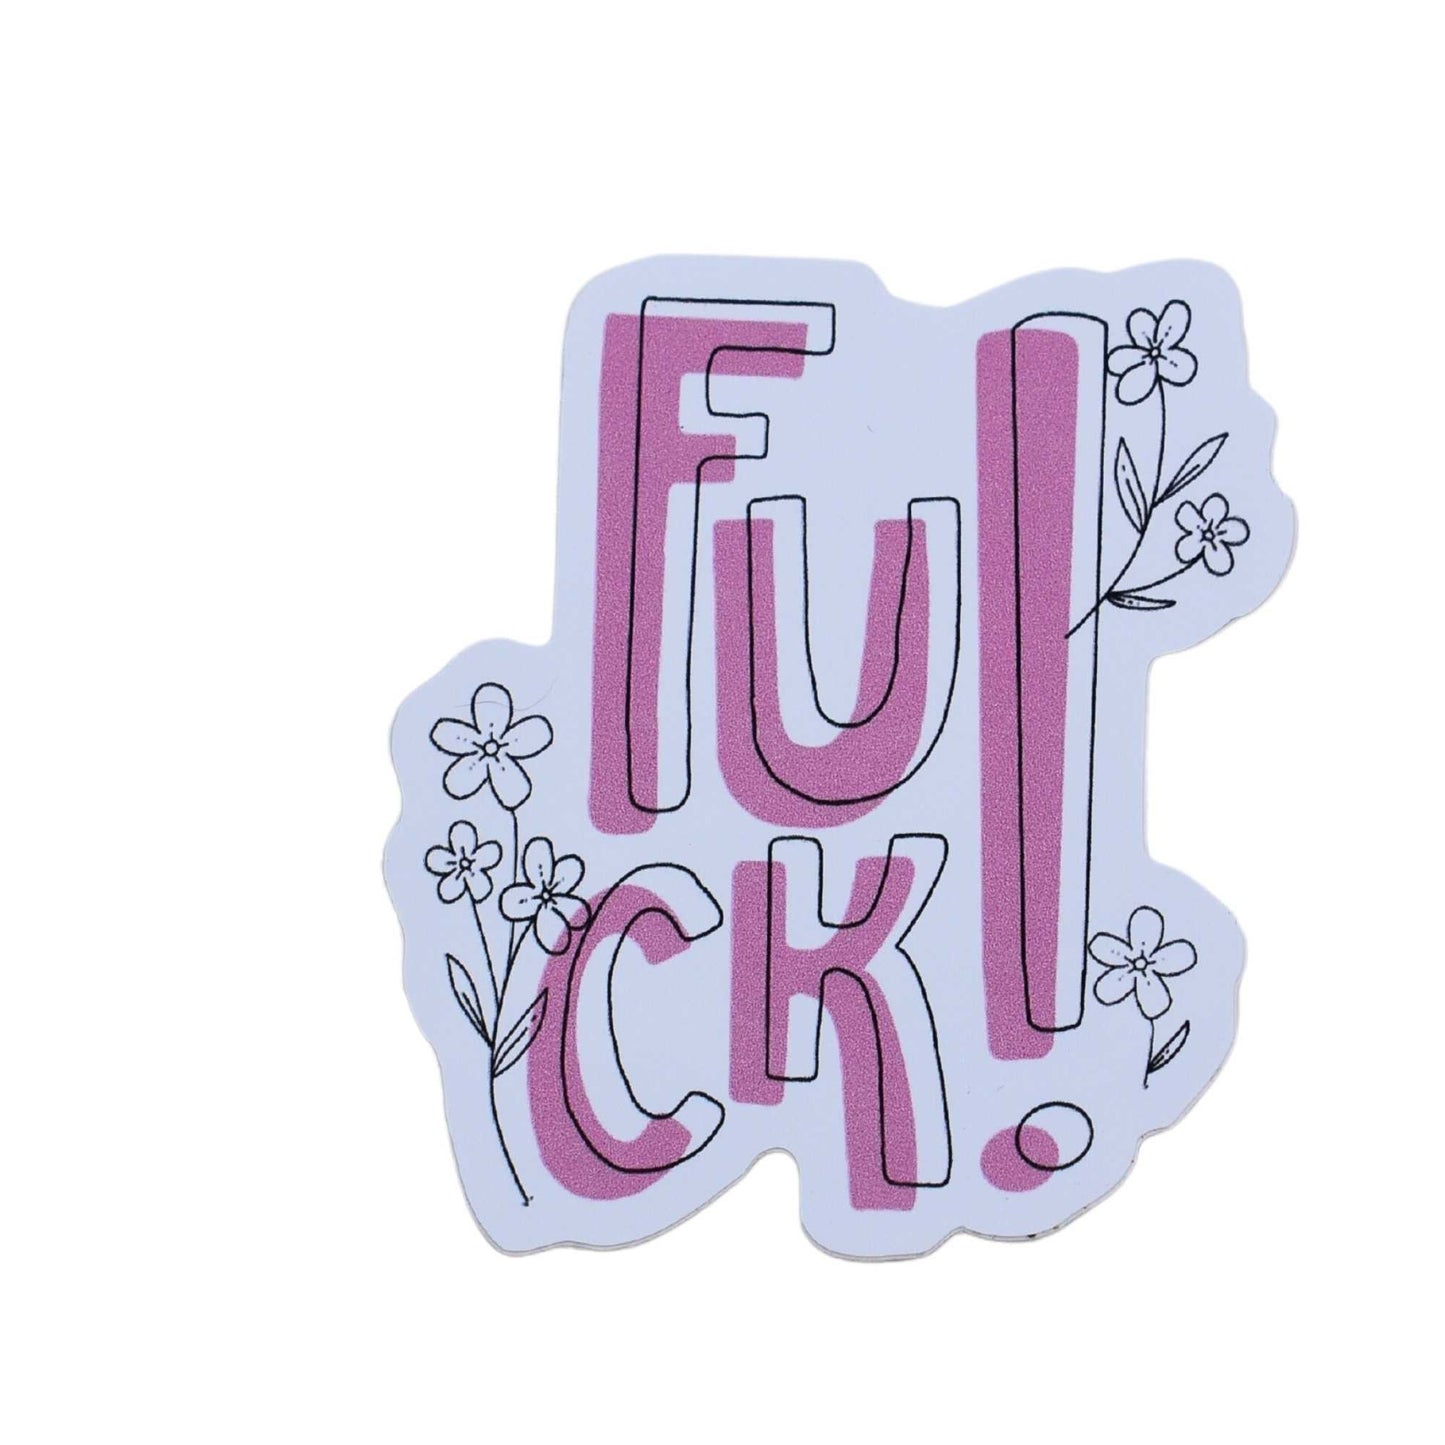 Fuck Sticker, Vinyl Laptop Waterbottle Sticker, Floral box letter Swear Curse Word Sticker, Explicit Sticker